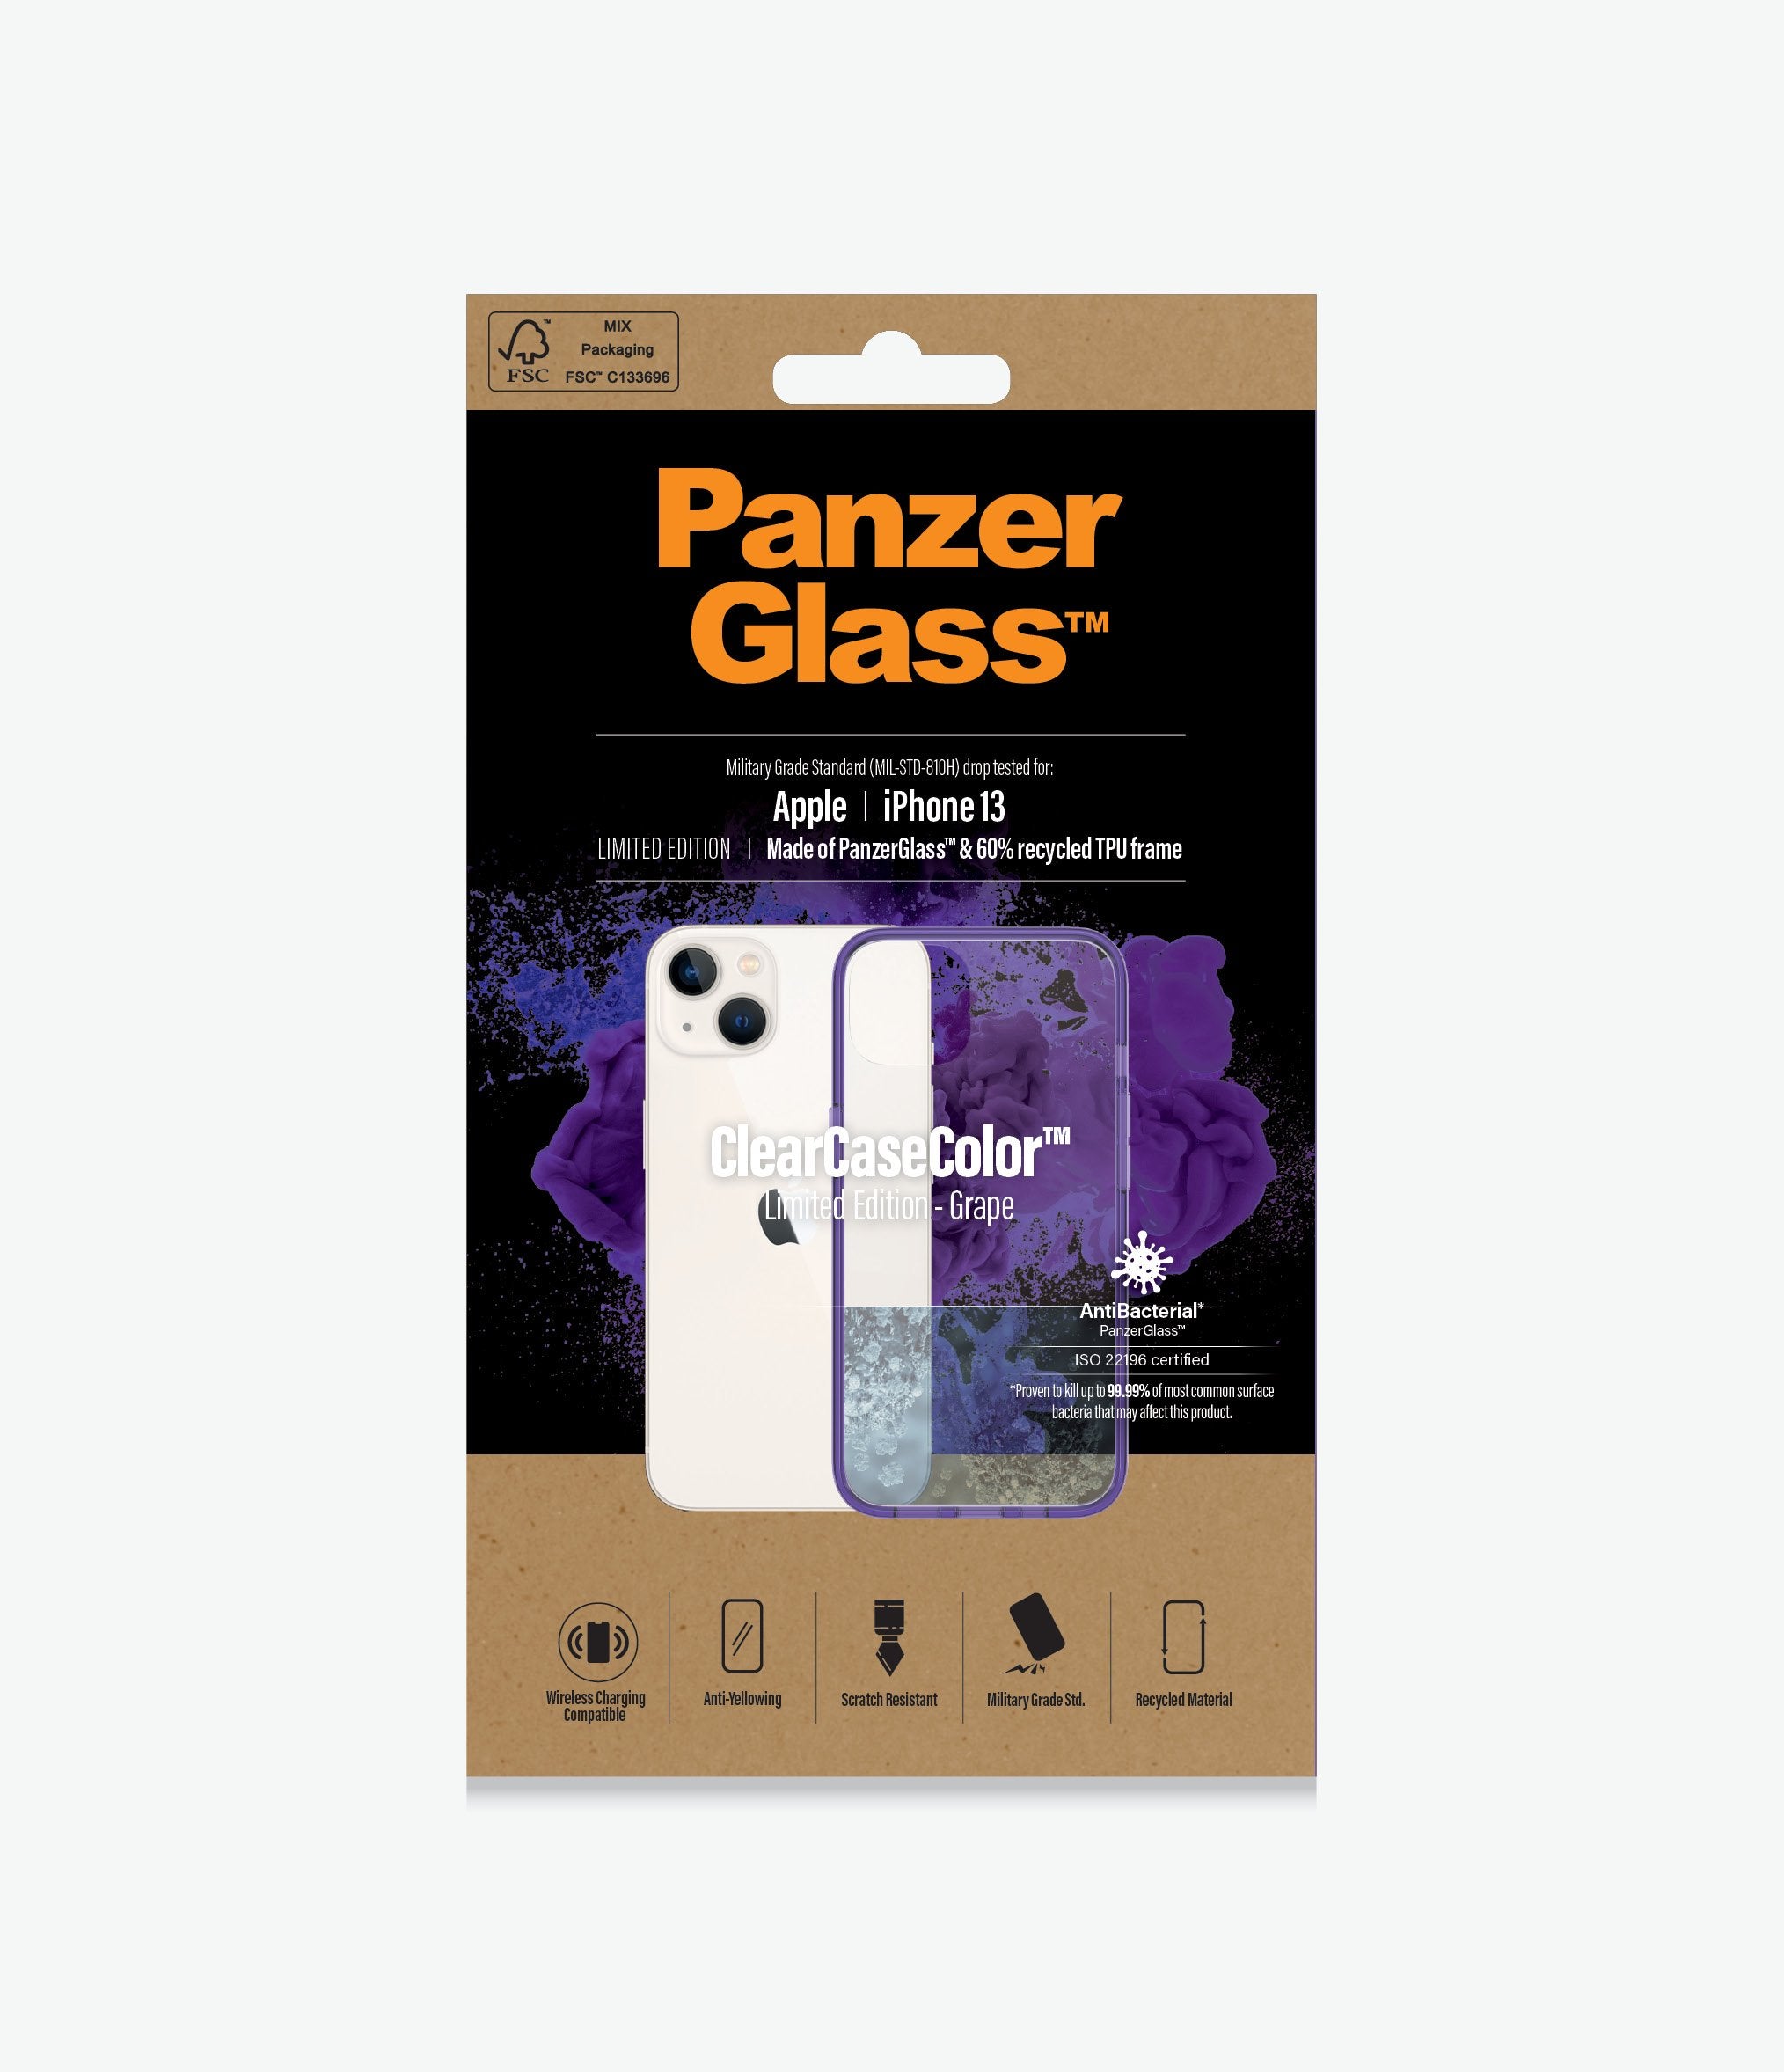 PanzerGlass Clear Case Color iPhone 13